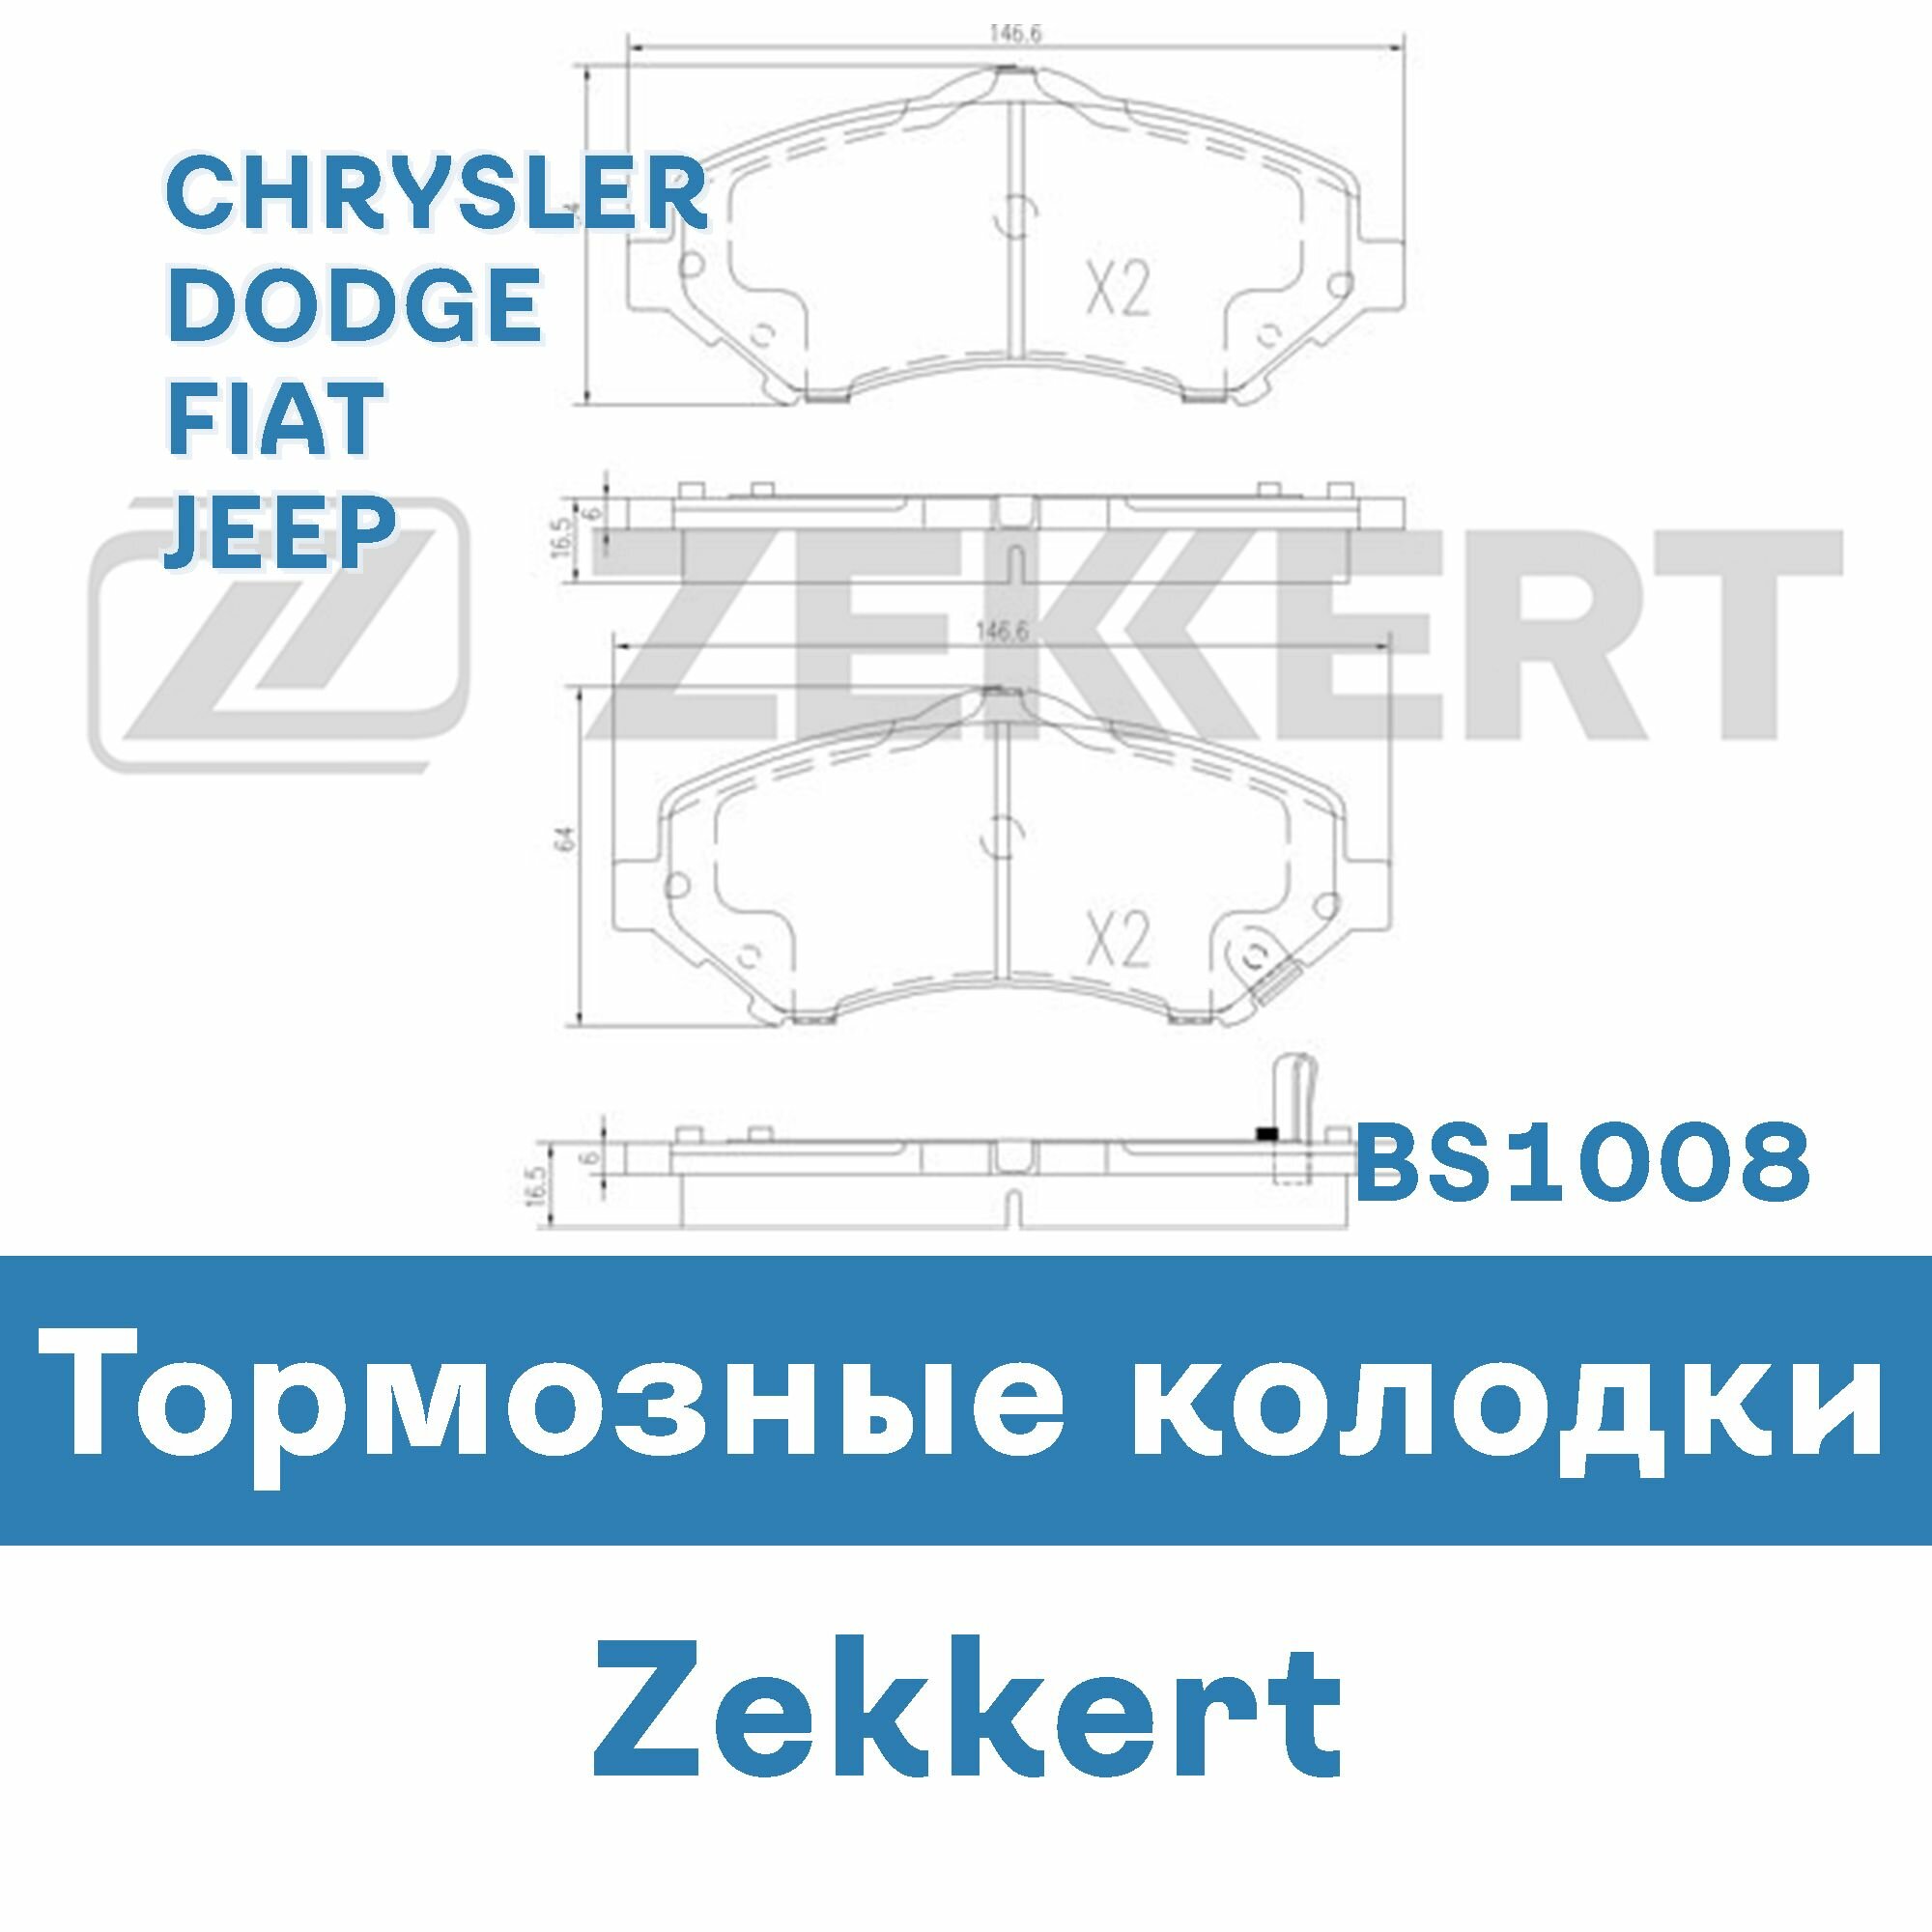 Тормозные колодки для CHRYSLER, DODGE, FIAT, JEEP BS1008 ZEKKERT